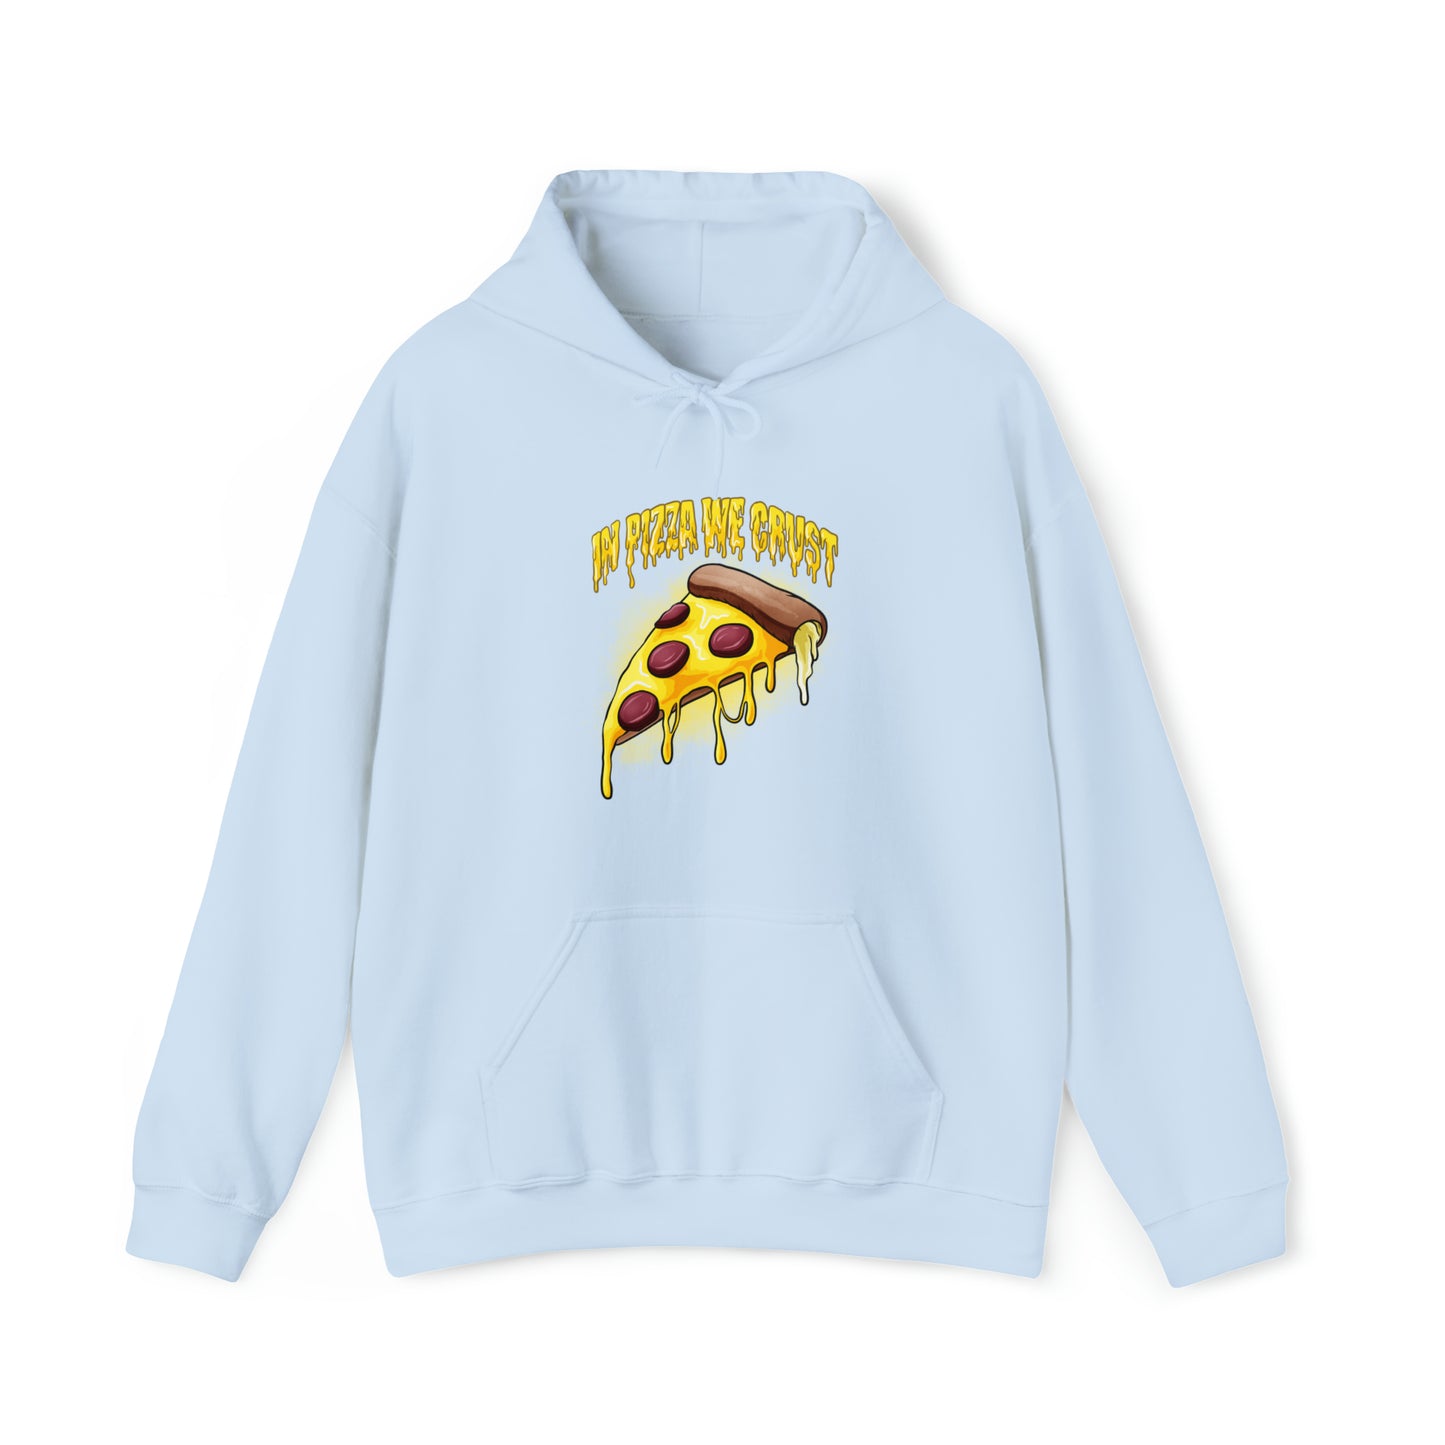 Custom Parody Hooded Sweatshirt, In Pizza We Crust design